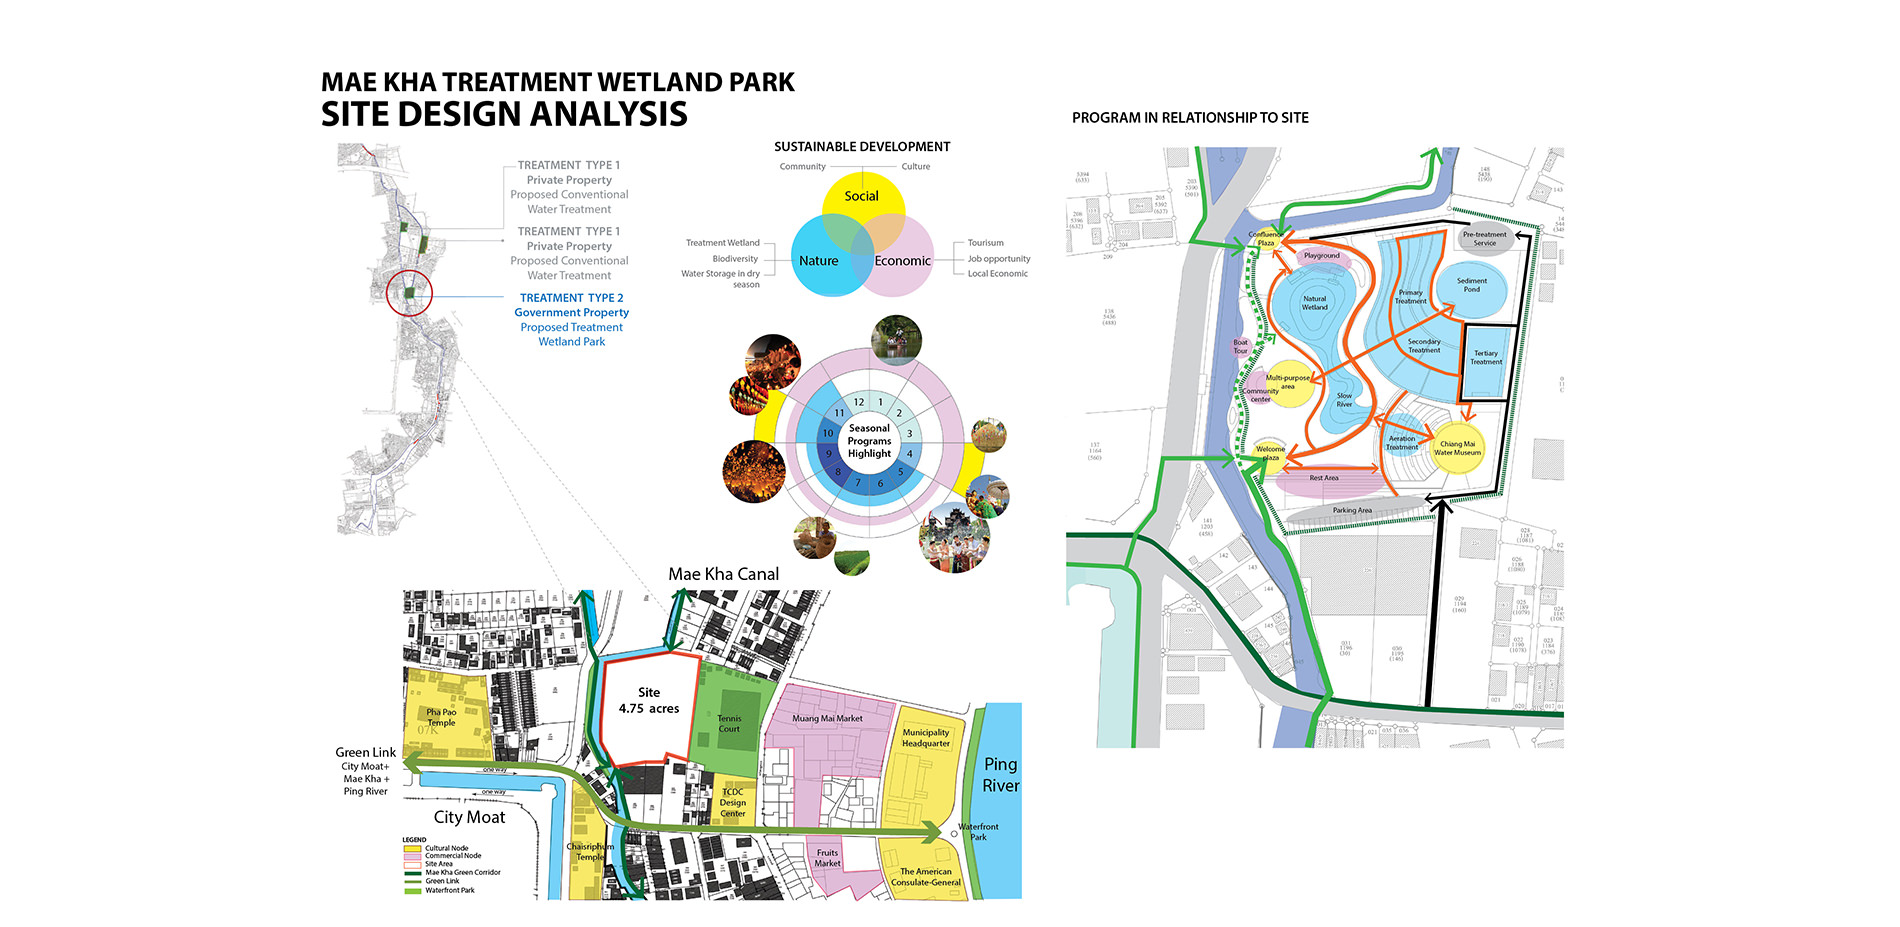 Mae Kha treatment wetland park site design analysis